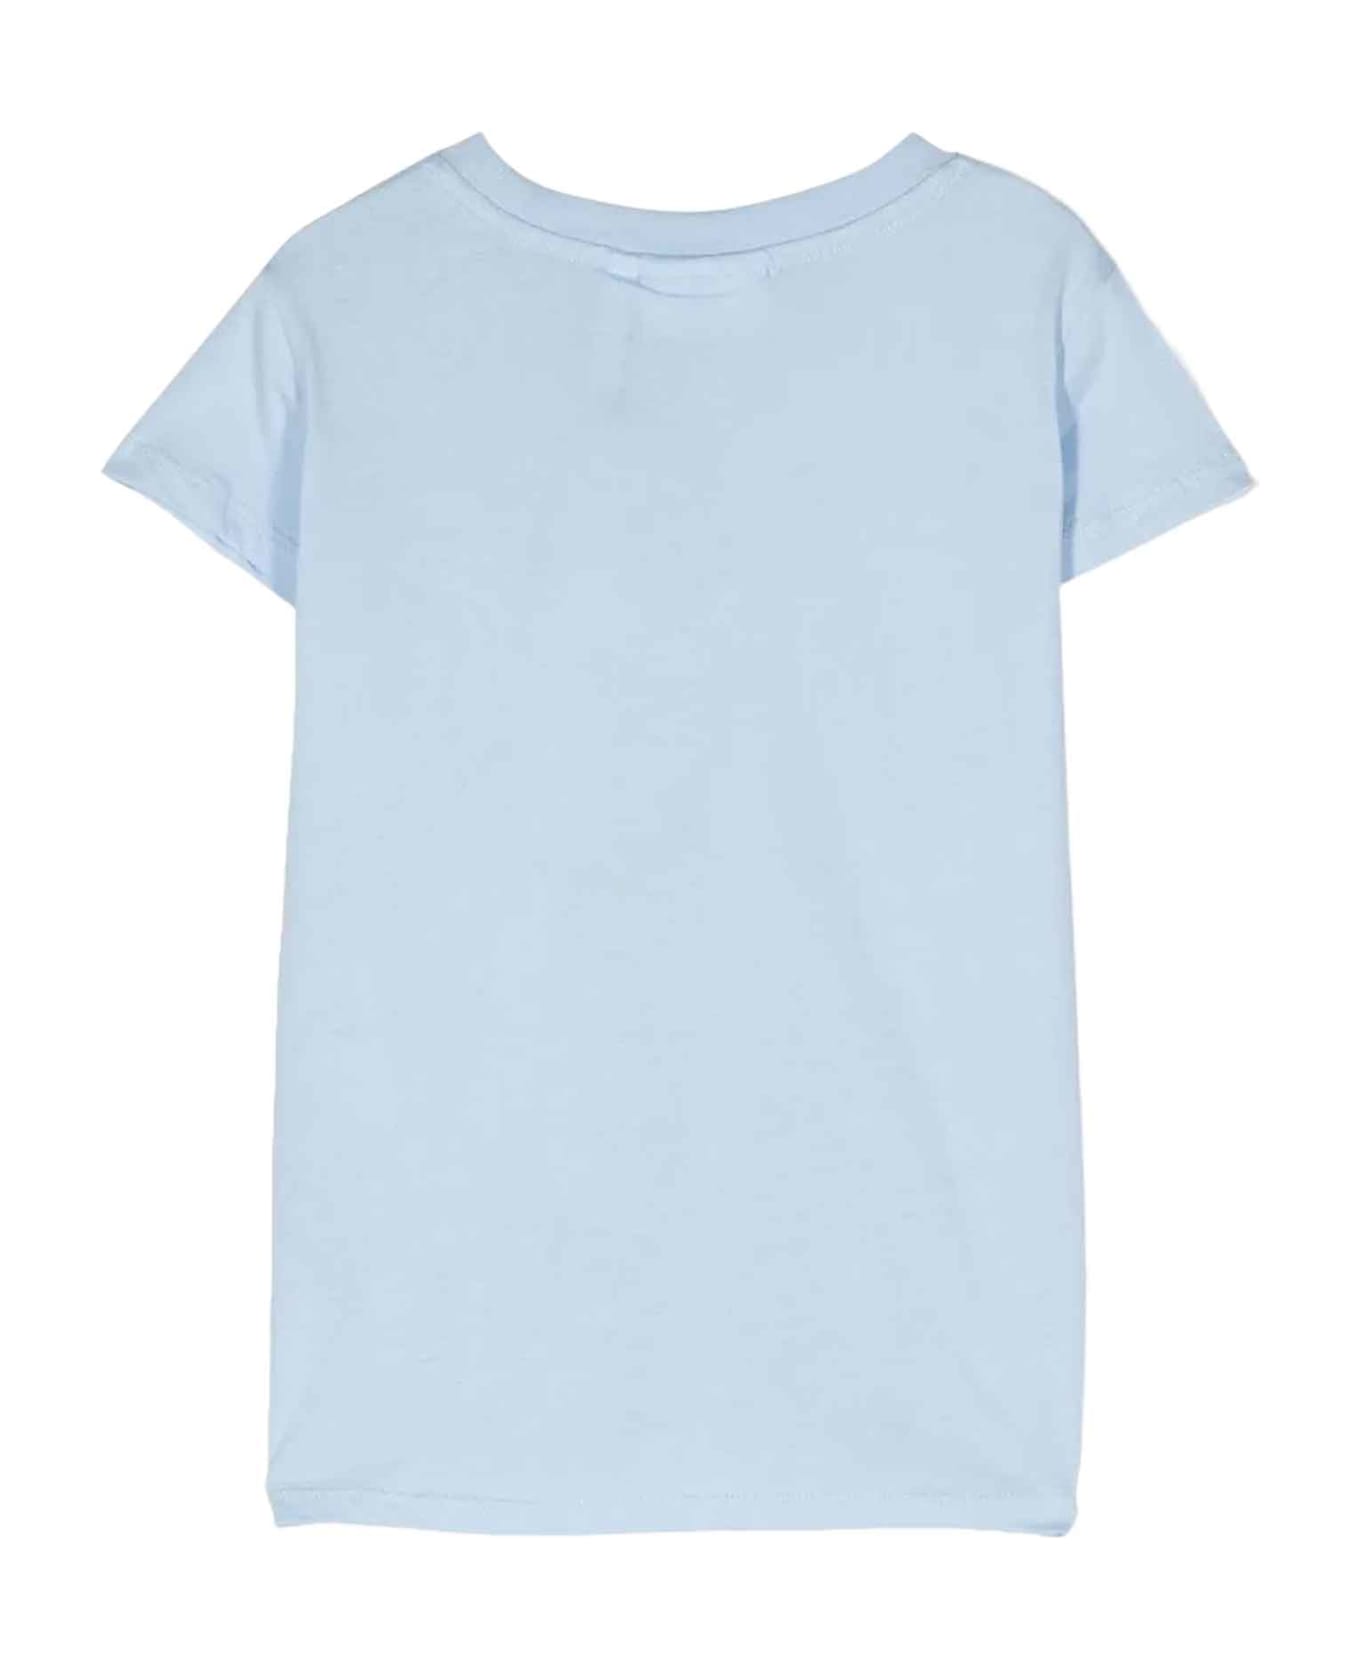 Molo Light Blue T-shirt Unisex Kids - Celeste